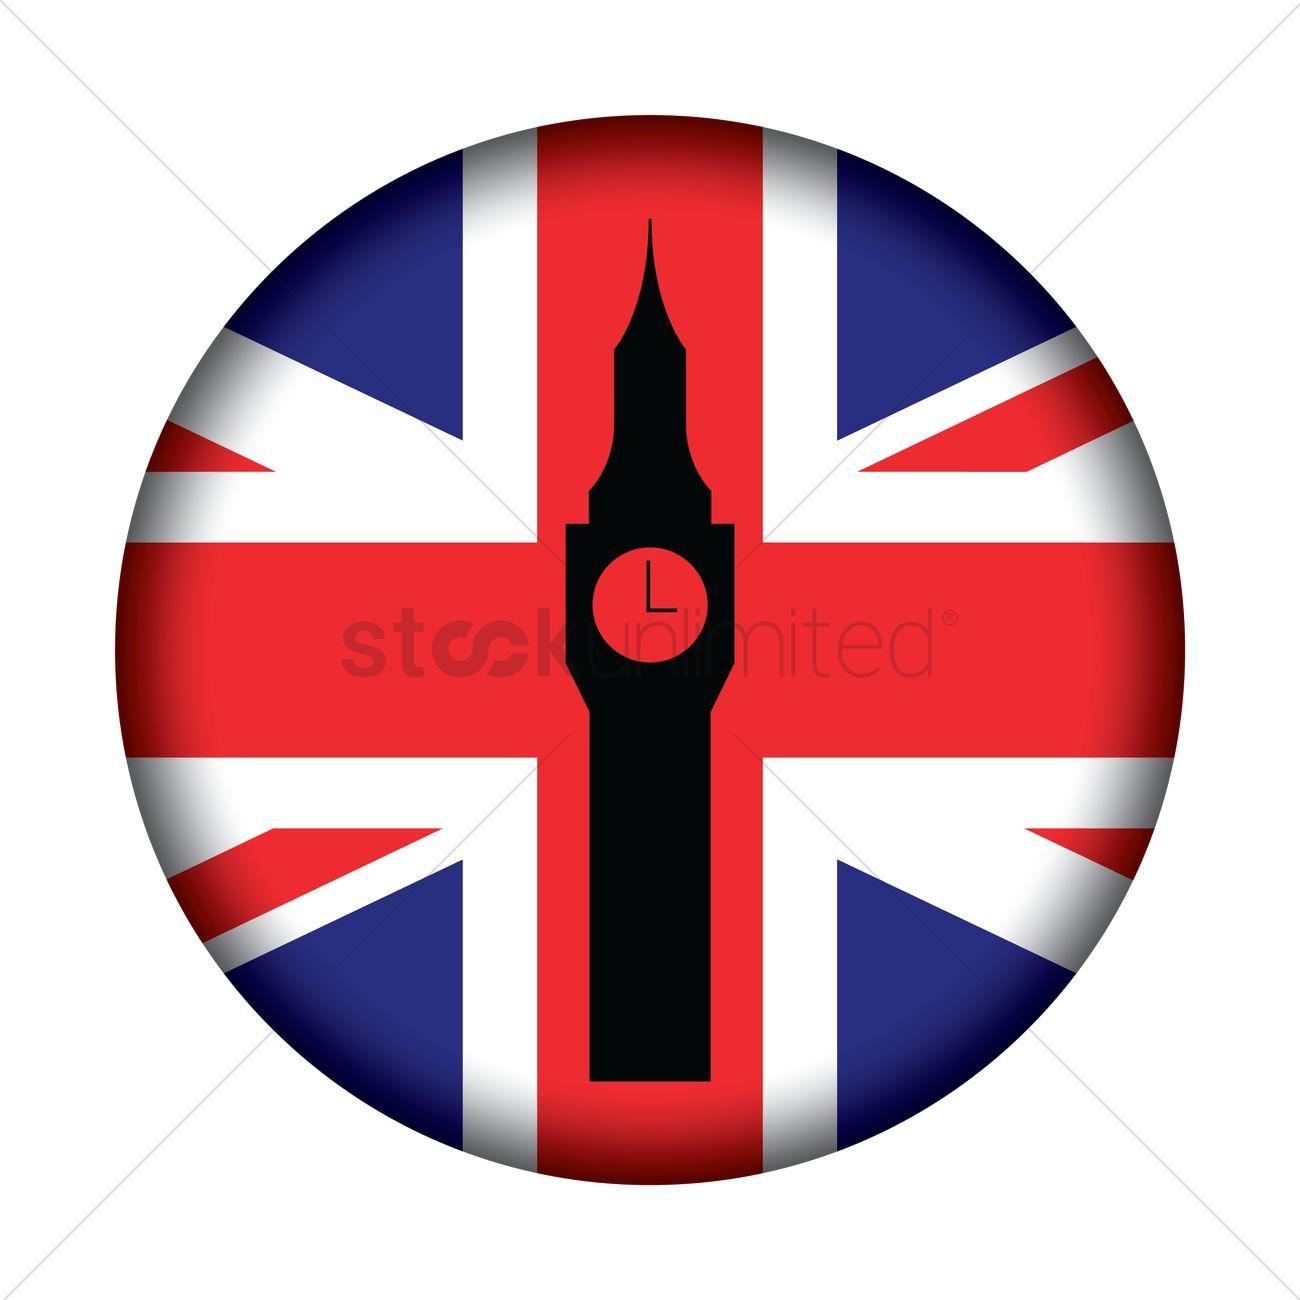 Big Ben Logo - Big ben clock tower Vector Image - 1576663 | StockUnlimited